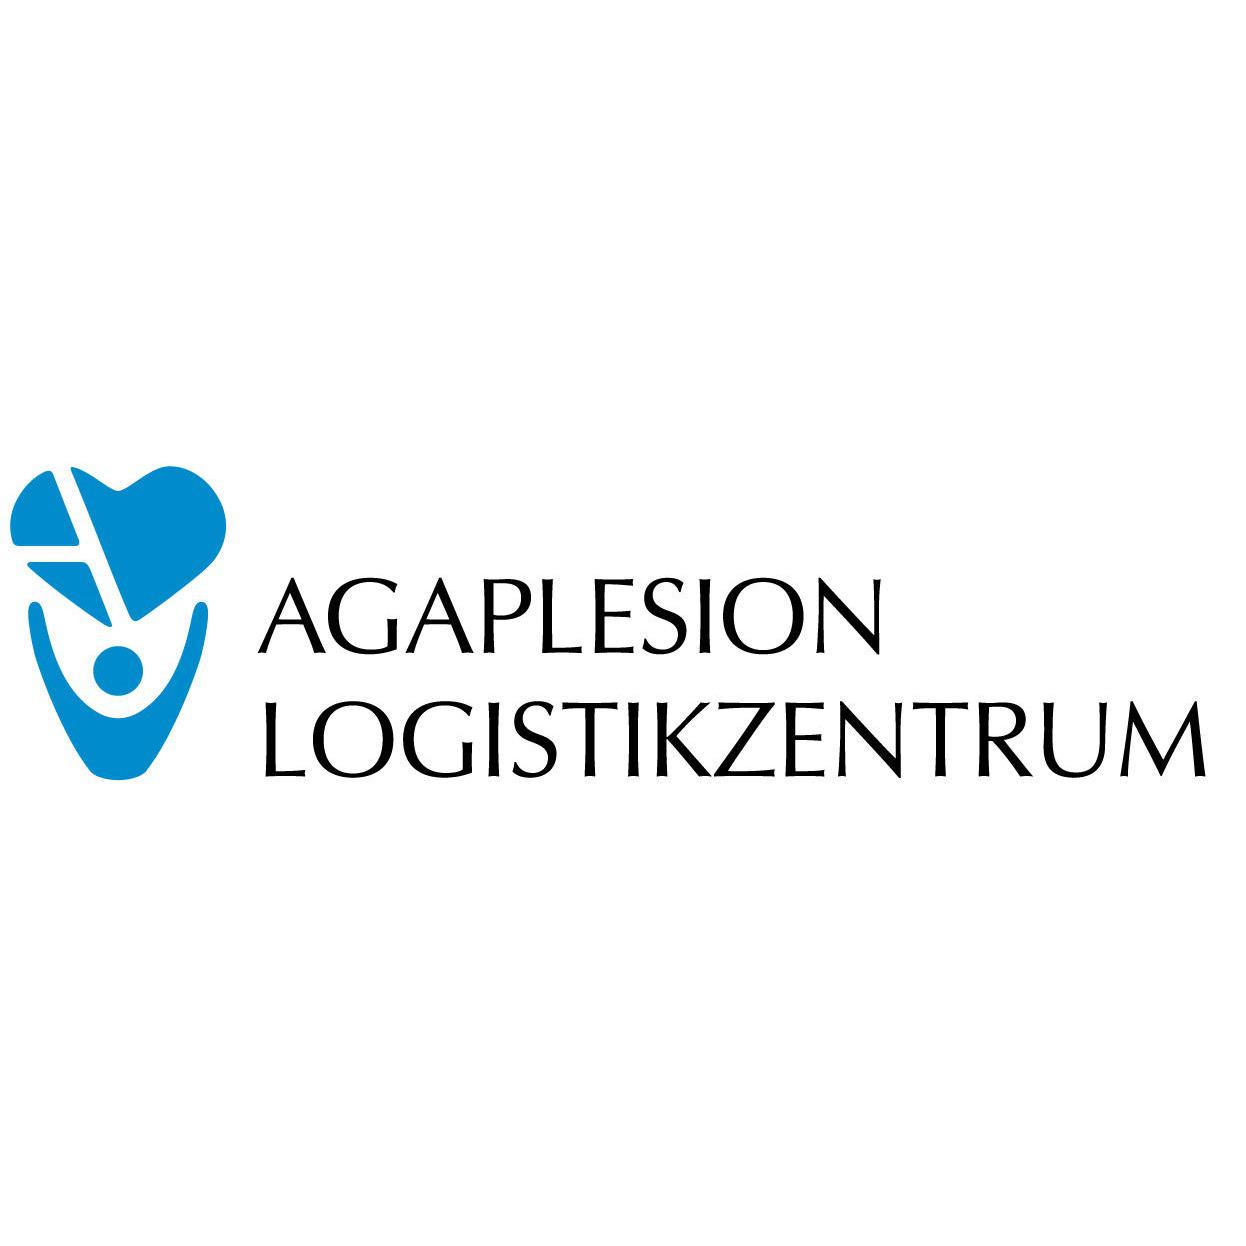 AGAPLESION LOGISTIKZENTRUM Logo